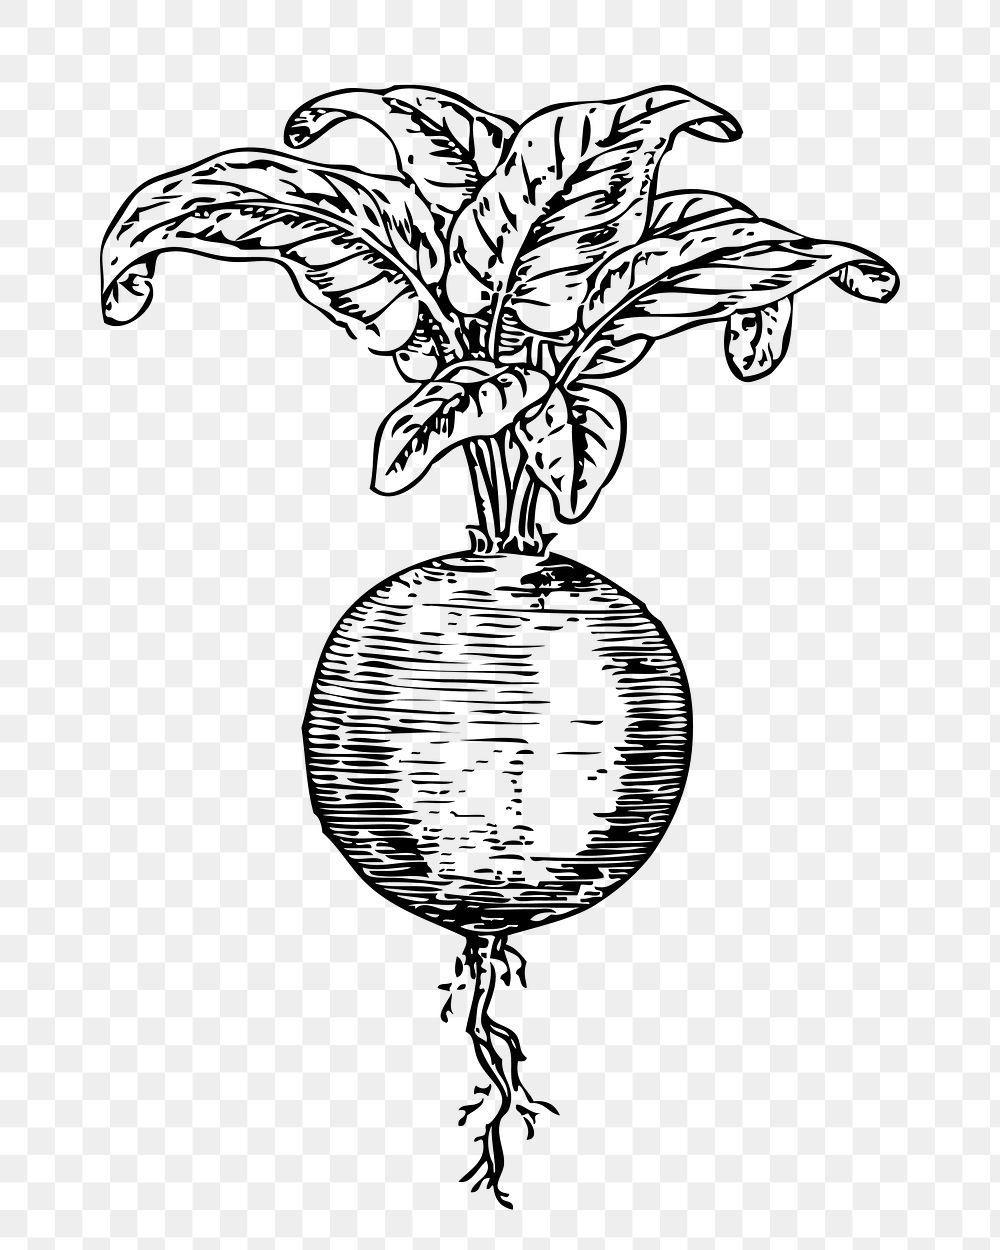 Beetroot png sticker, vintage plant illustration on transparent background. Free public domain CC0 image.